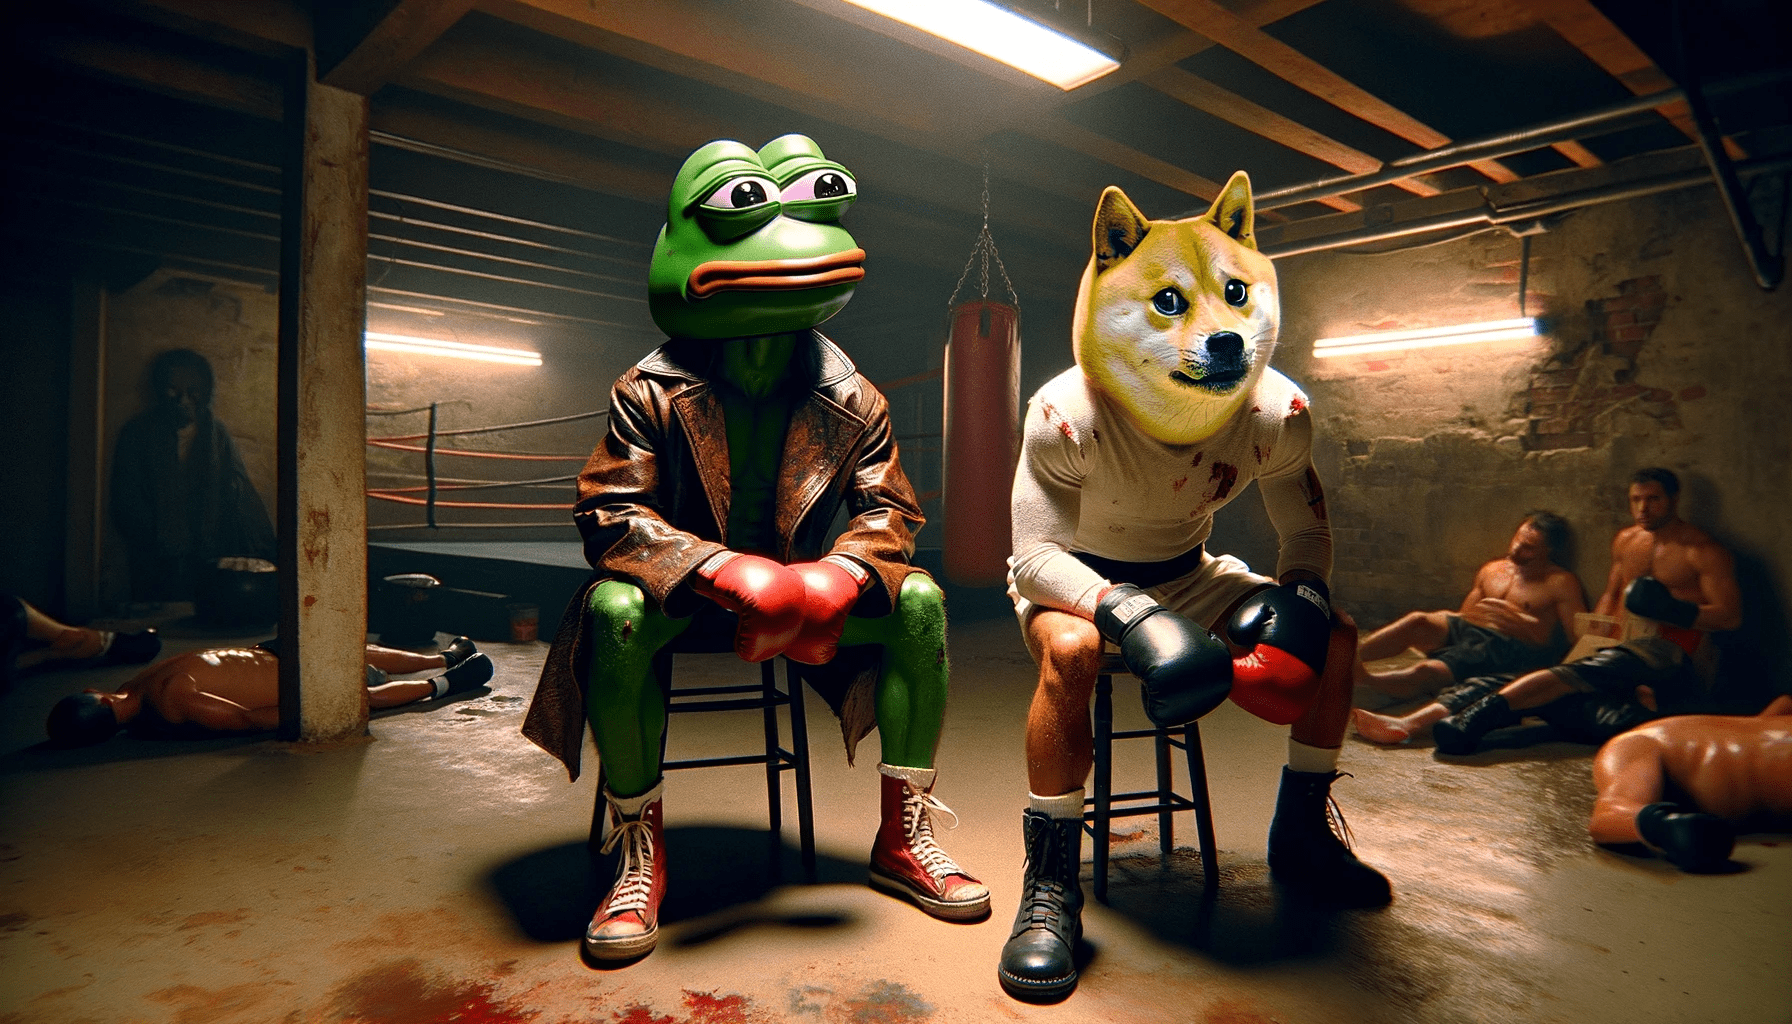 Meme coin mascots in a boxing basement